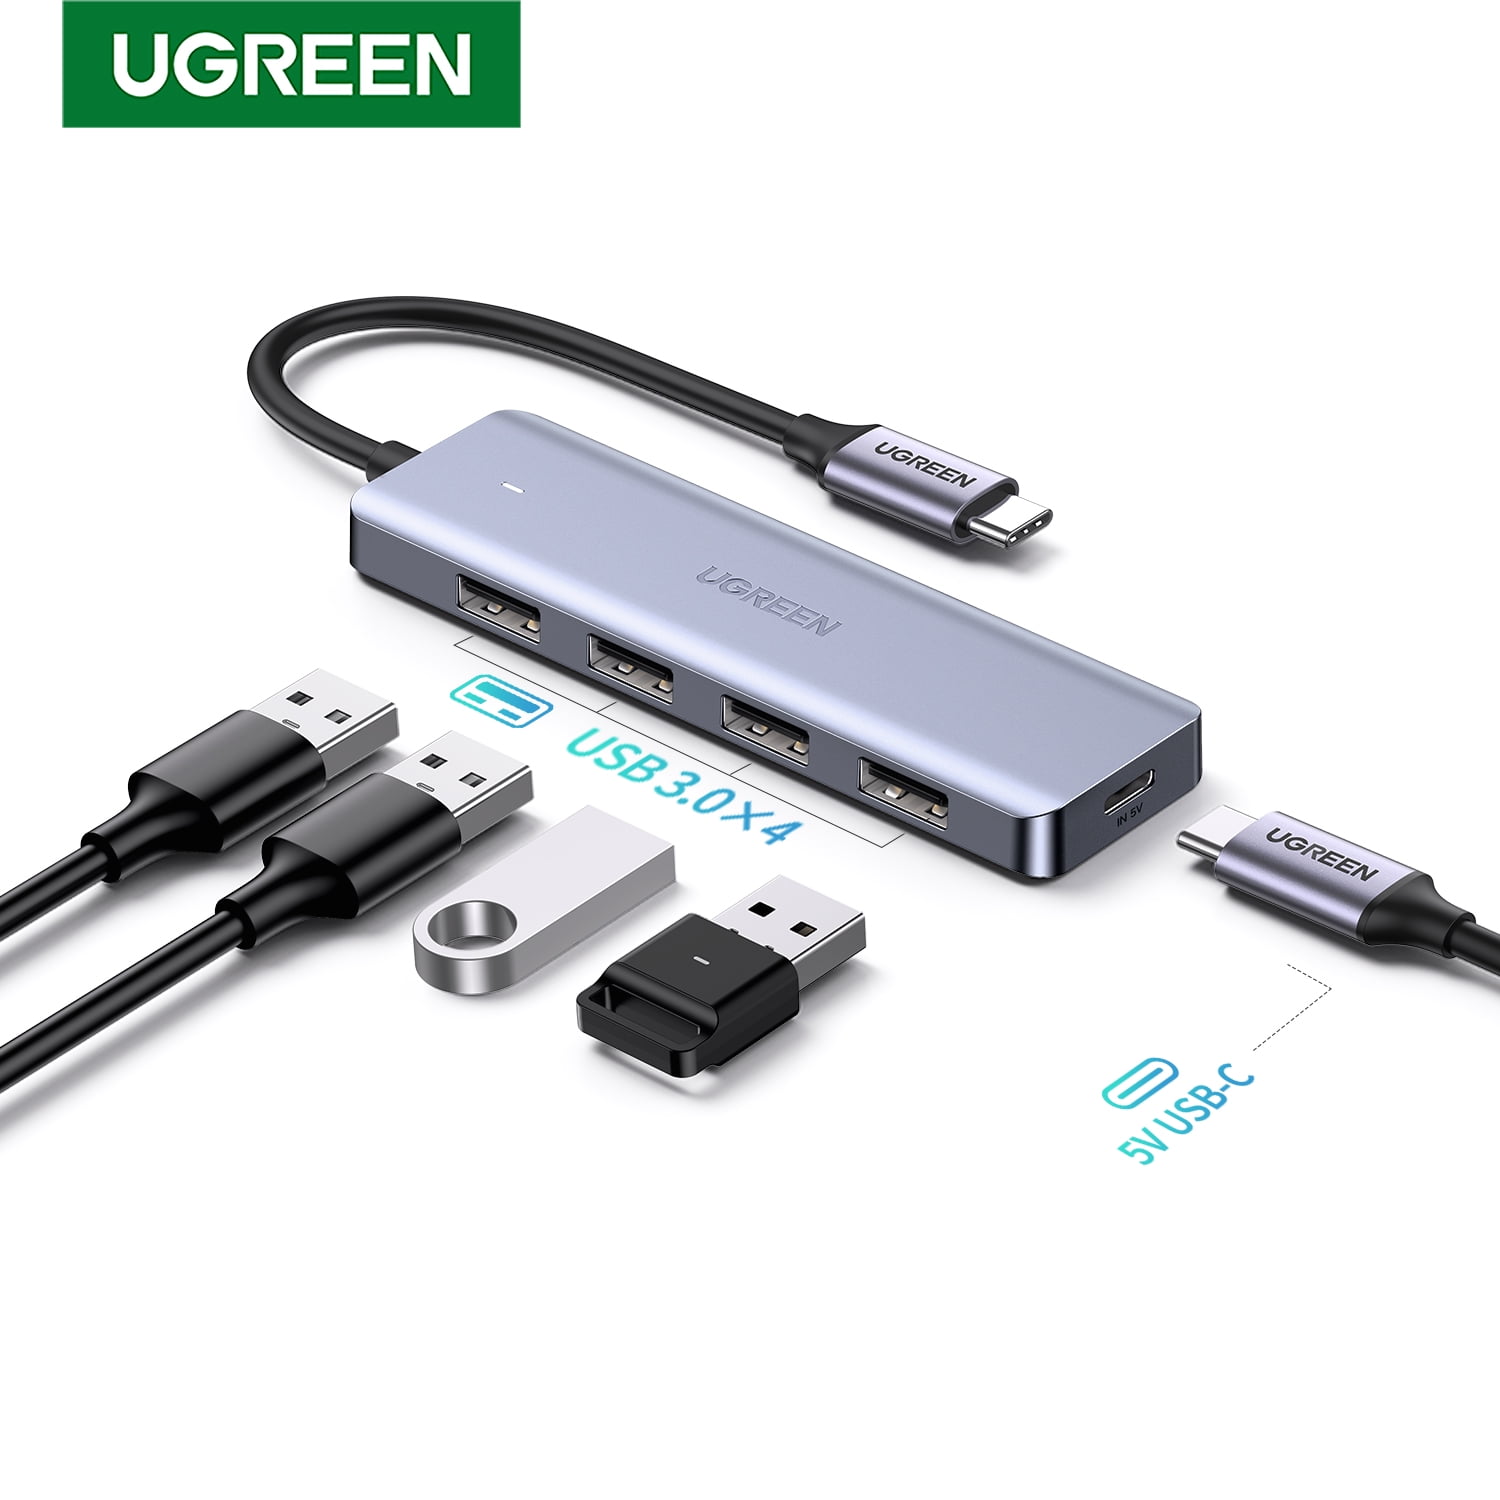 New Type C to 4 Port USB 3.0 Hub Adapter For Macbook Pro Google ChromeBook PC 